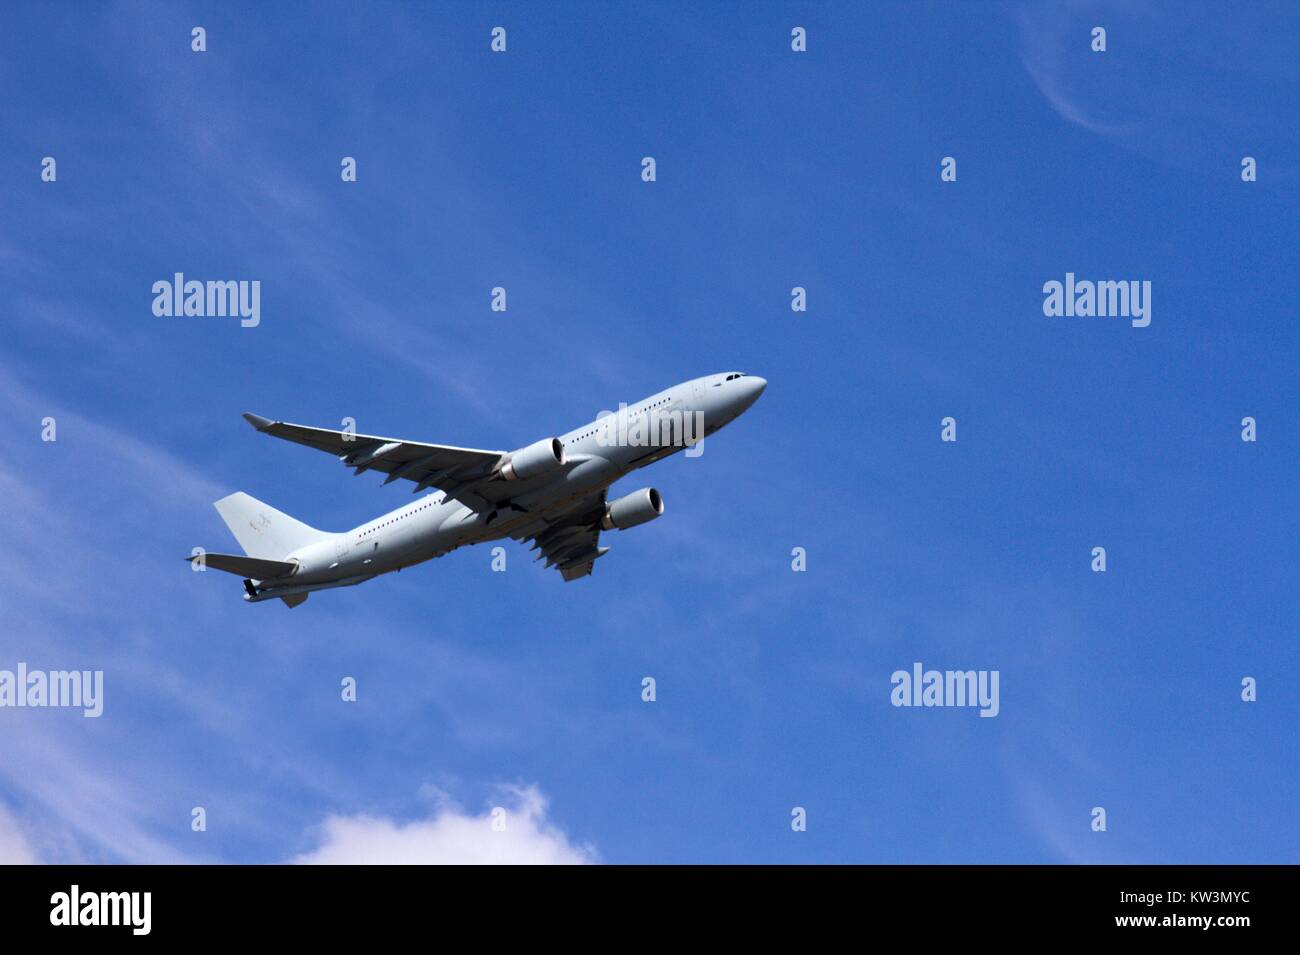 Jumbo jet plane flying upwards against a bright blue sky. Stock Photo